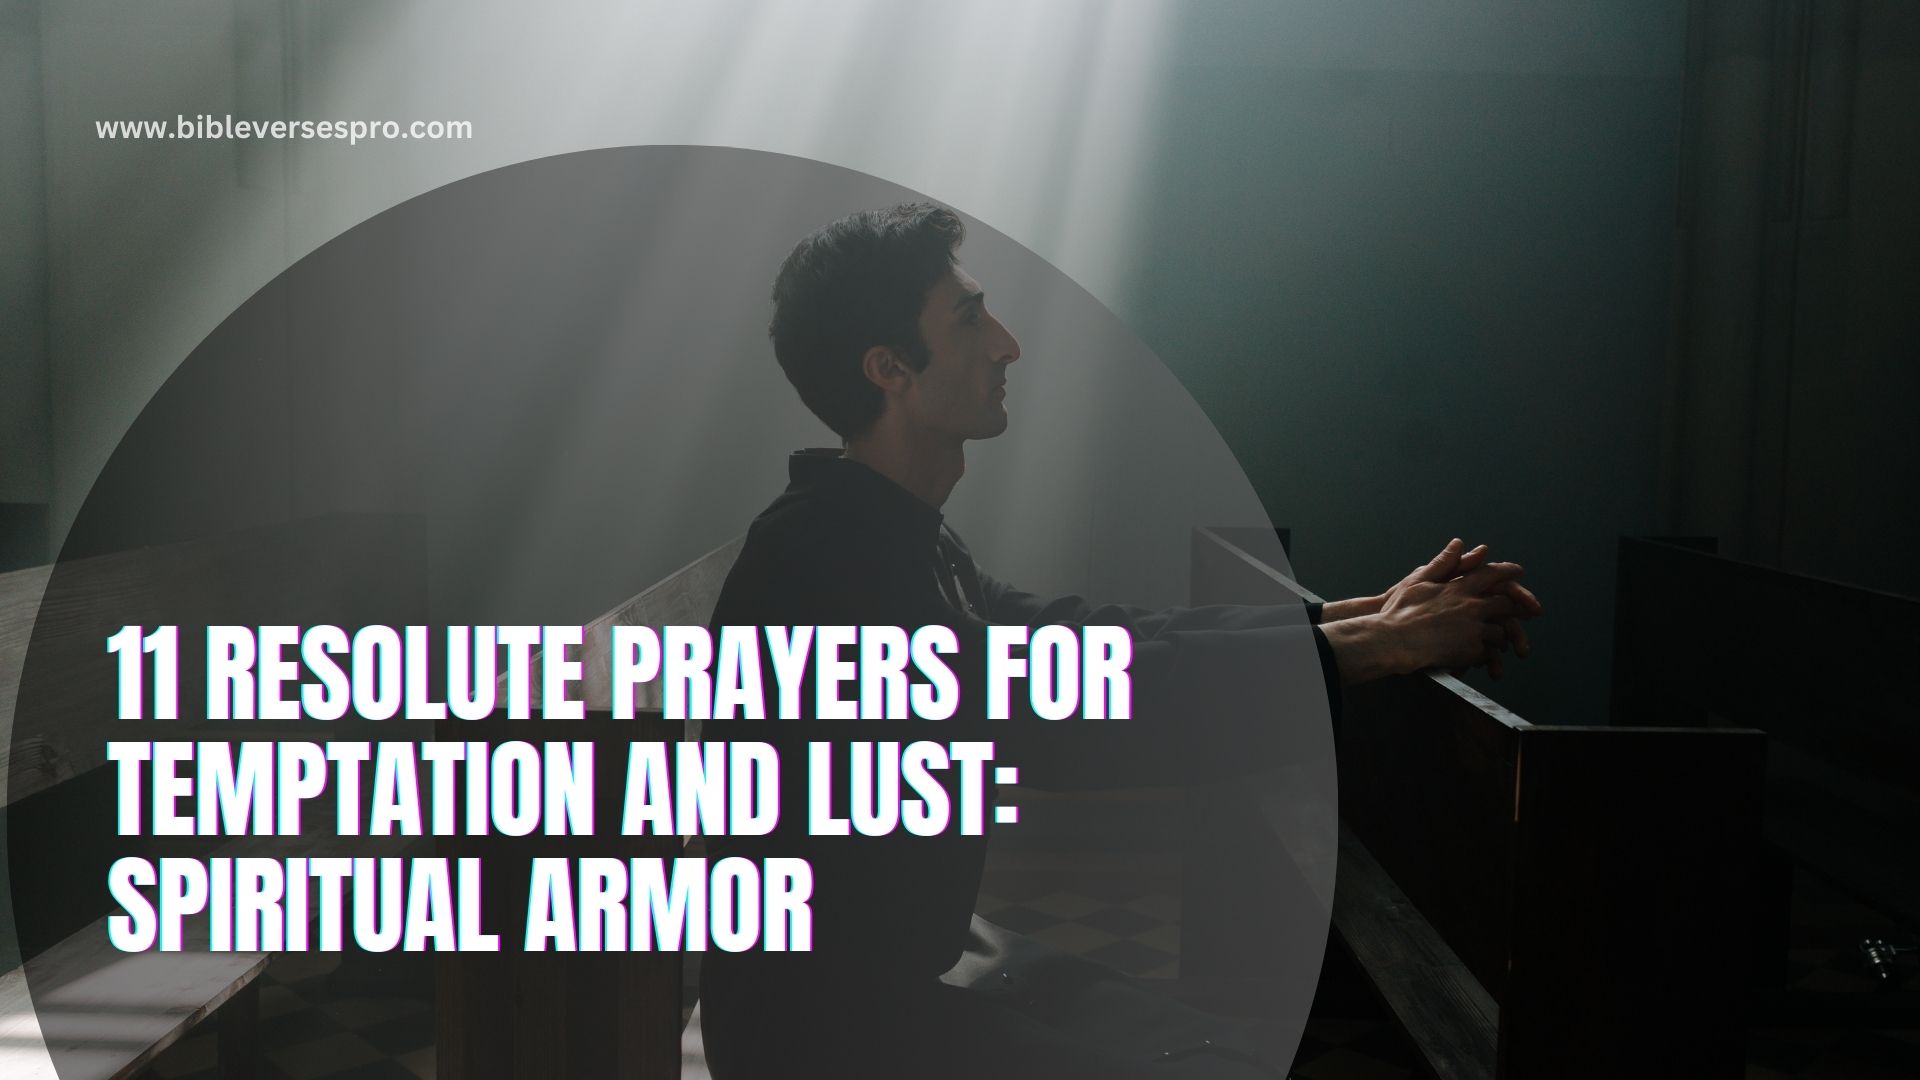 11 Resolute Prayers for Temptation and Lust: Spiritual Armor